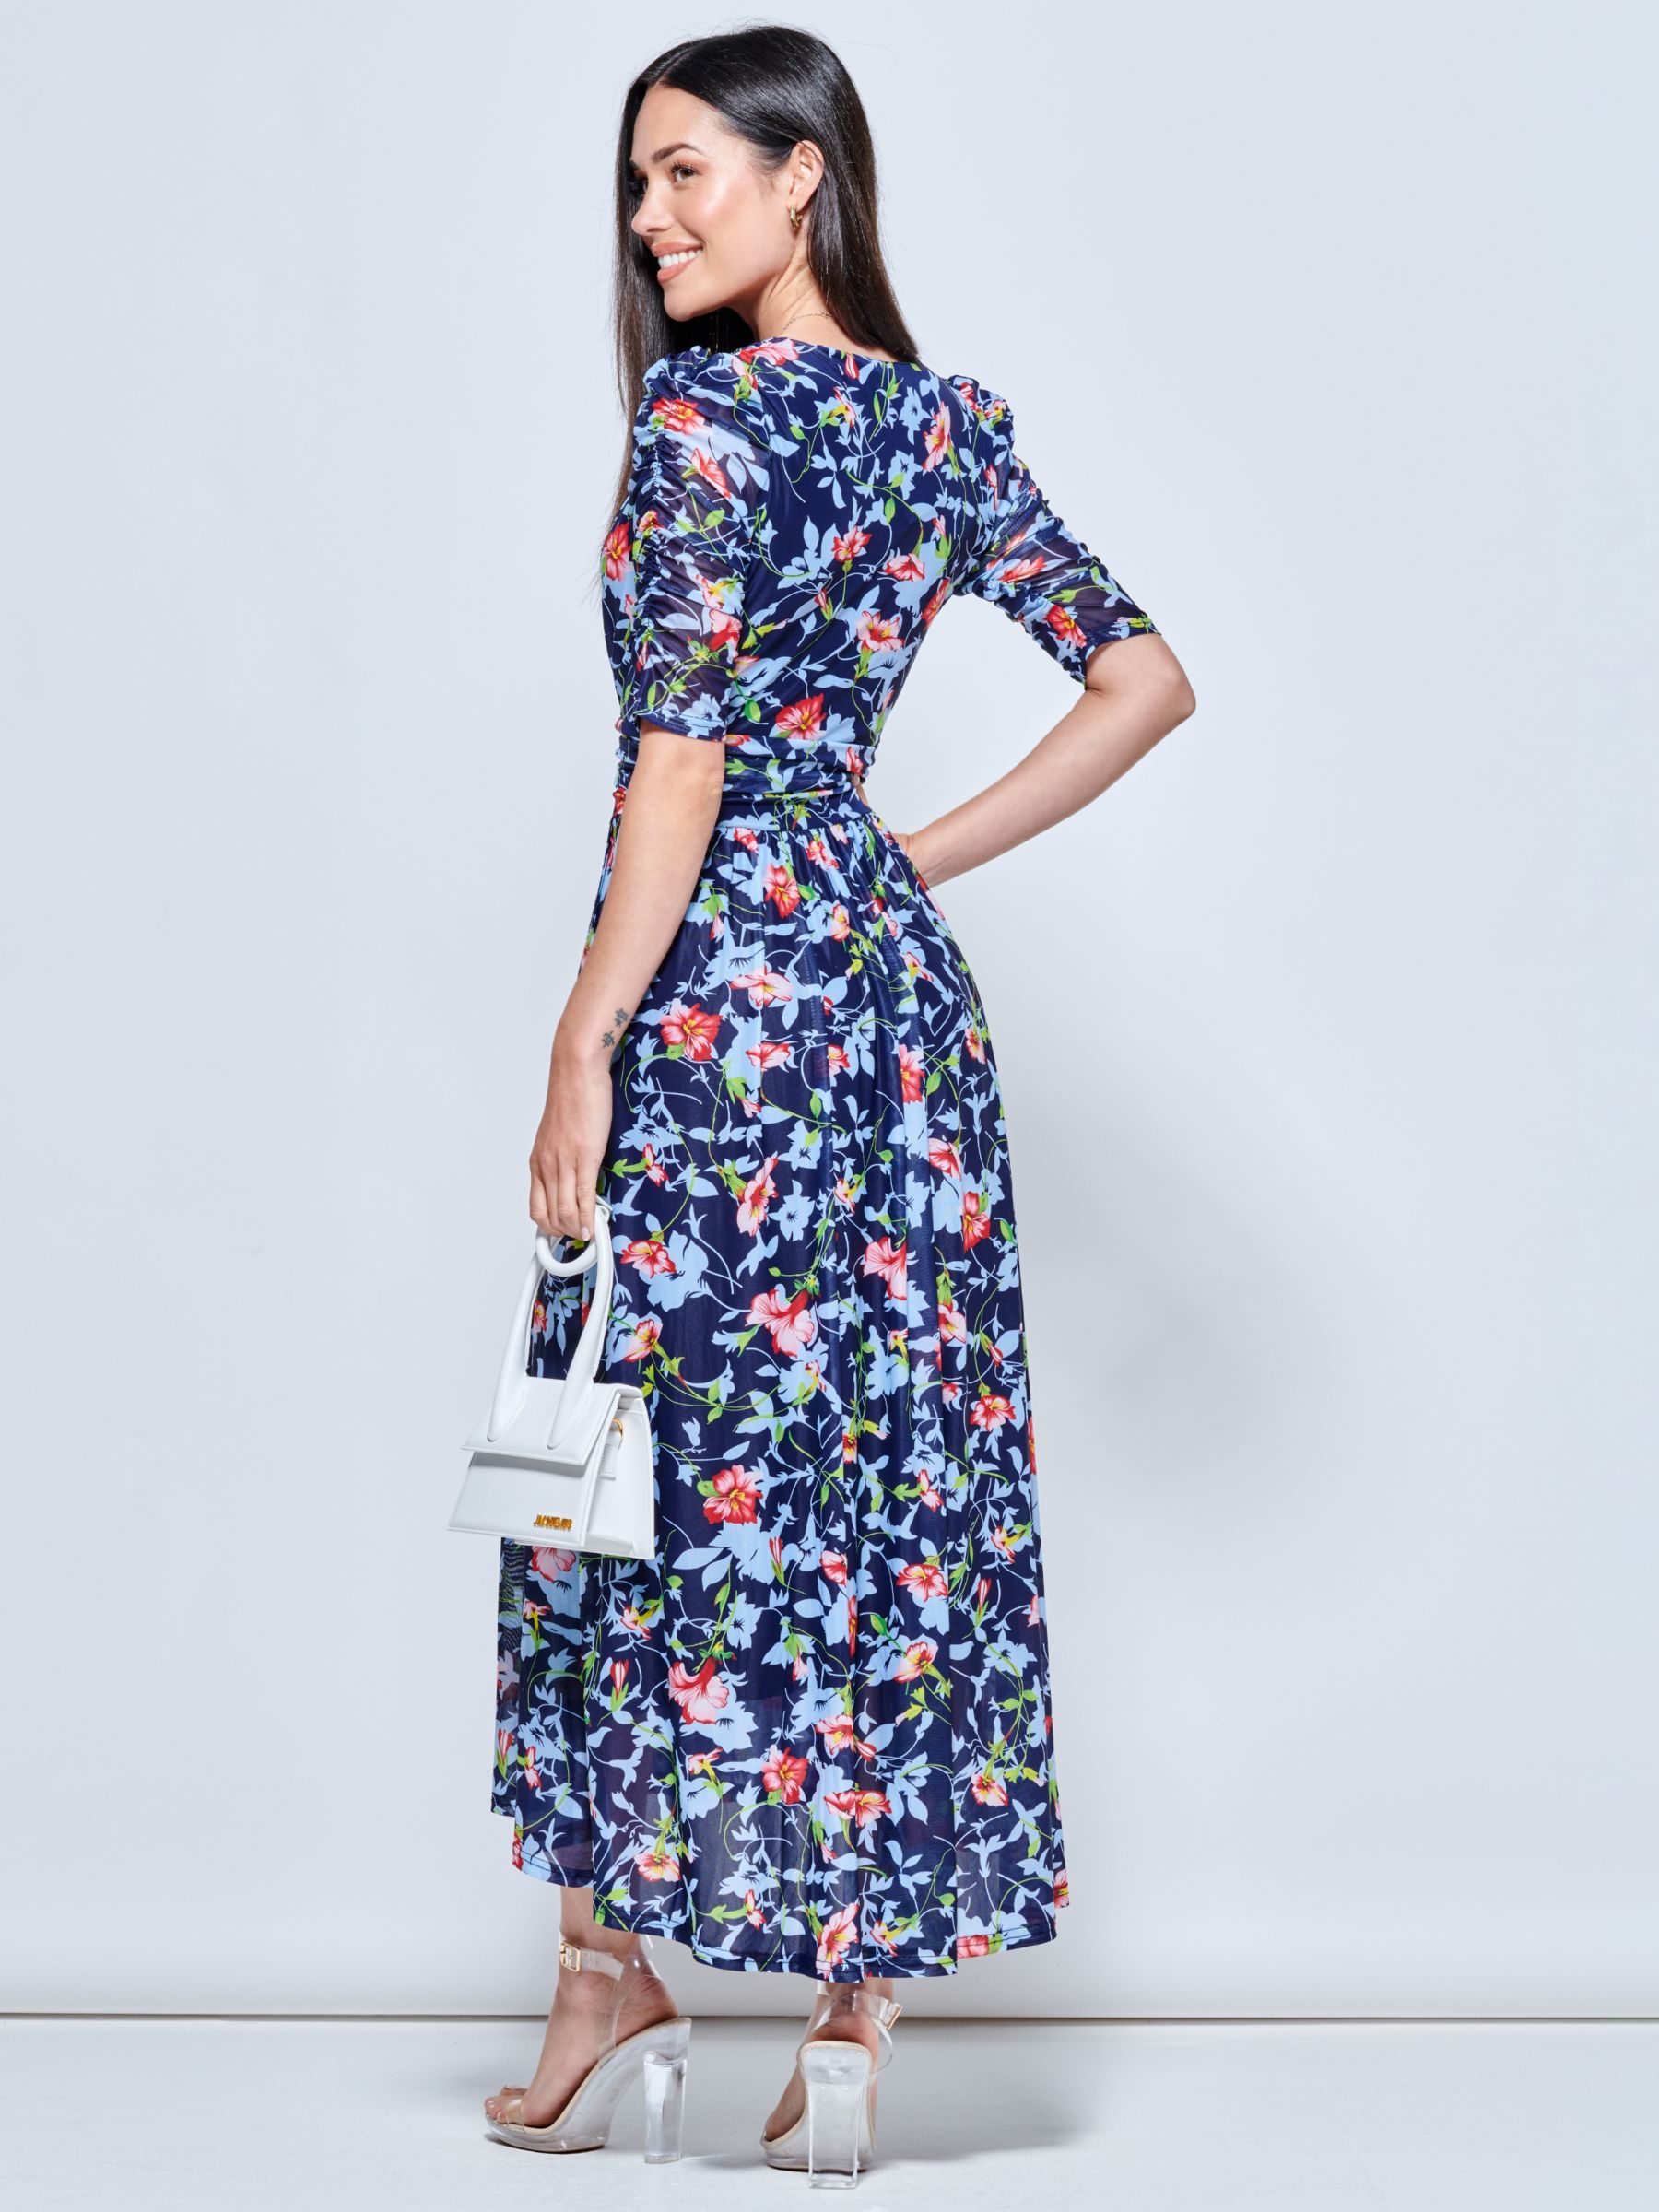 Jolie Moi Gavina Ruched Sleeve Mesh Maxi Dress, Navy Floral, 8